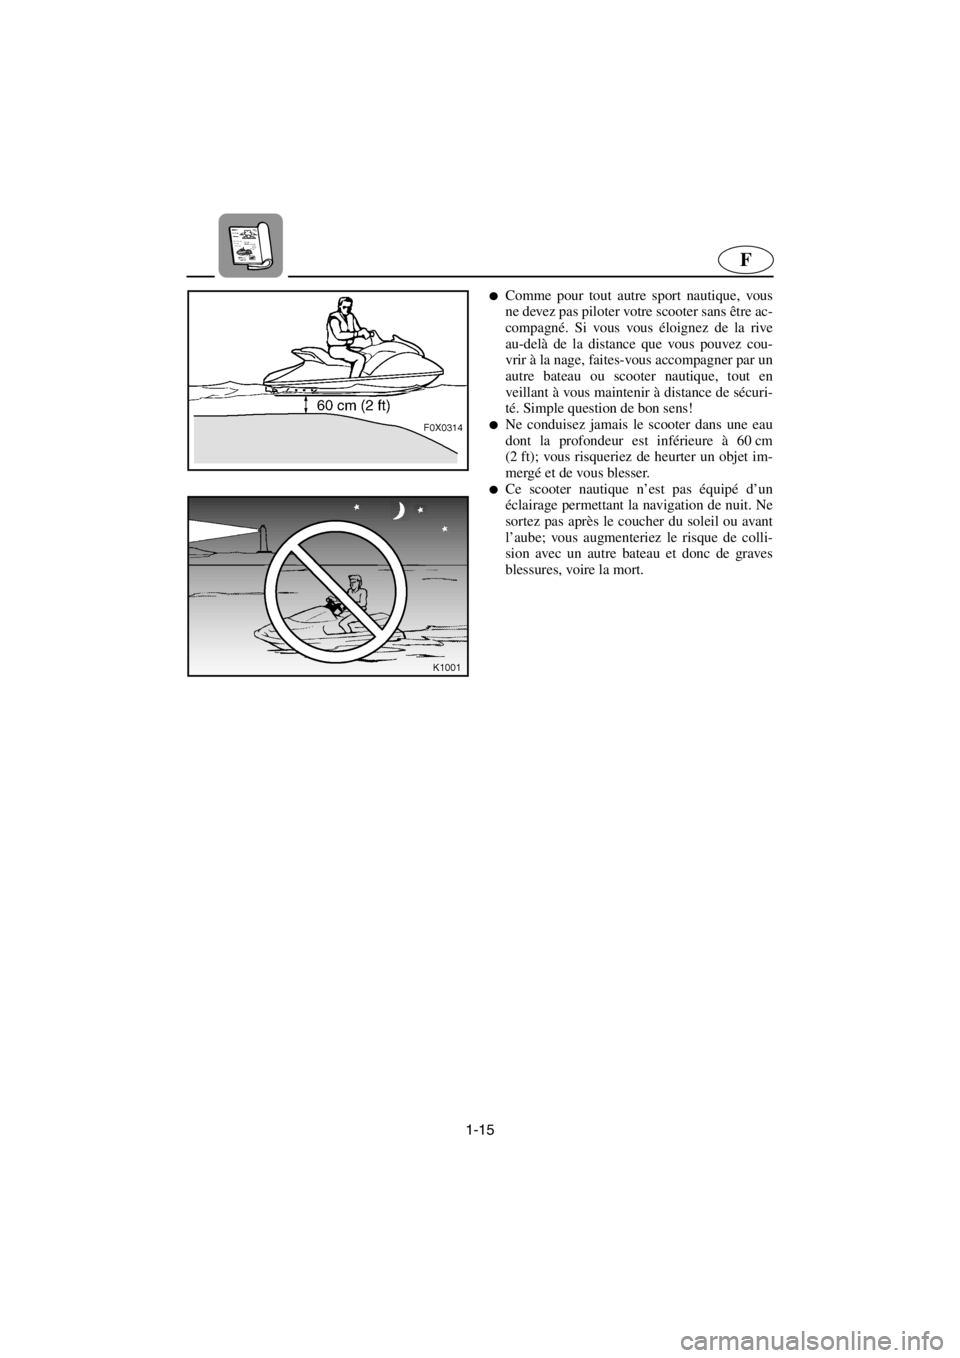 YAMAHA GP1200 2001  Betriebsanleitungen (in German) 1-15
F
Comme pour tout autre sport nautique, vous
ne devez pas piloter votre scooter sans être ac-
compagné. Si vous vous éloignez de la rive
au-delà de la distance que vous pouvez cou-
vrir à l